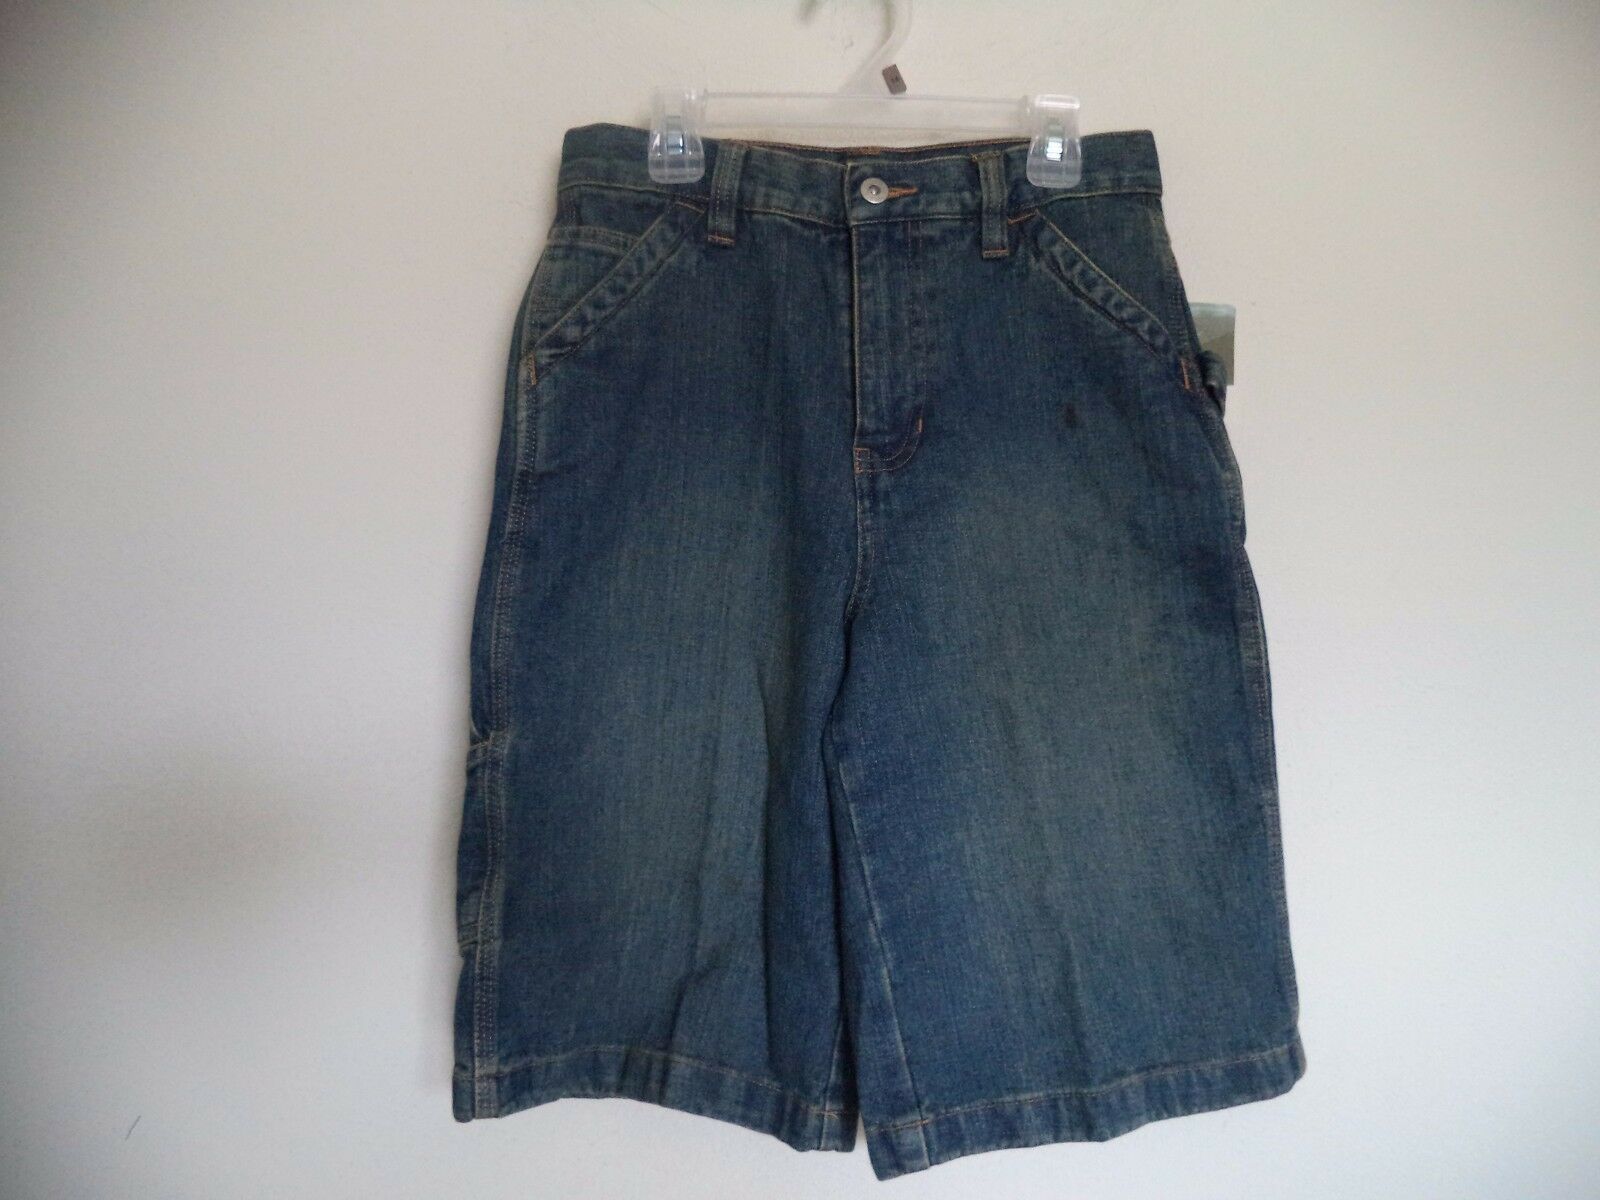 Boy's Canyon River Blues Jeans Short. Size 14. Boys 8 - 20. 100% Cotton. - $12.87